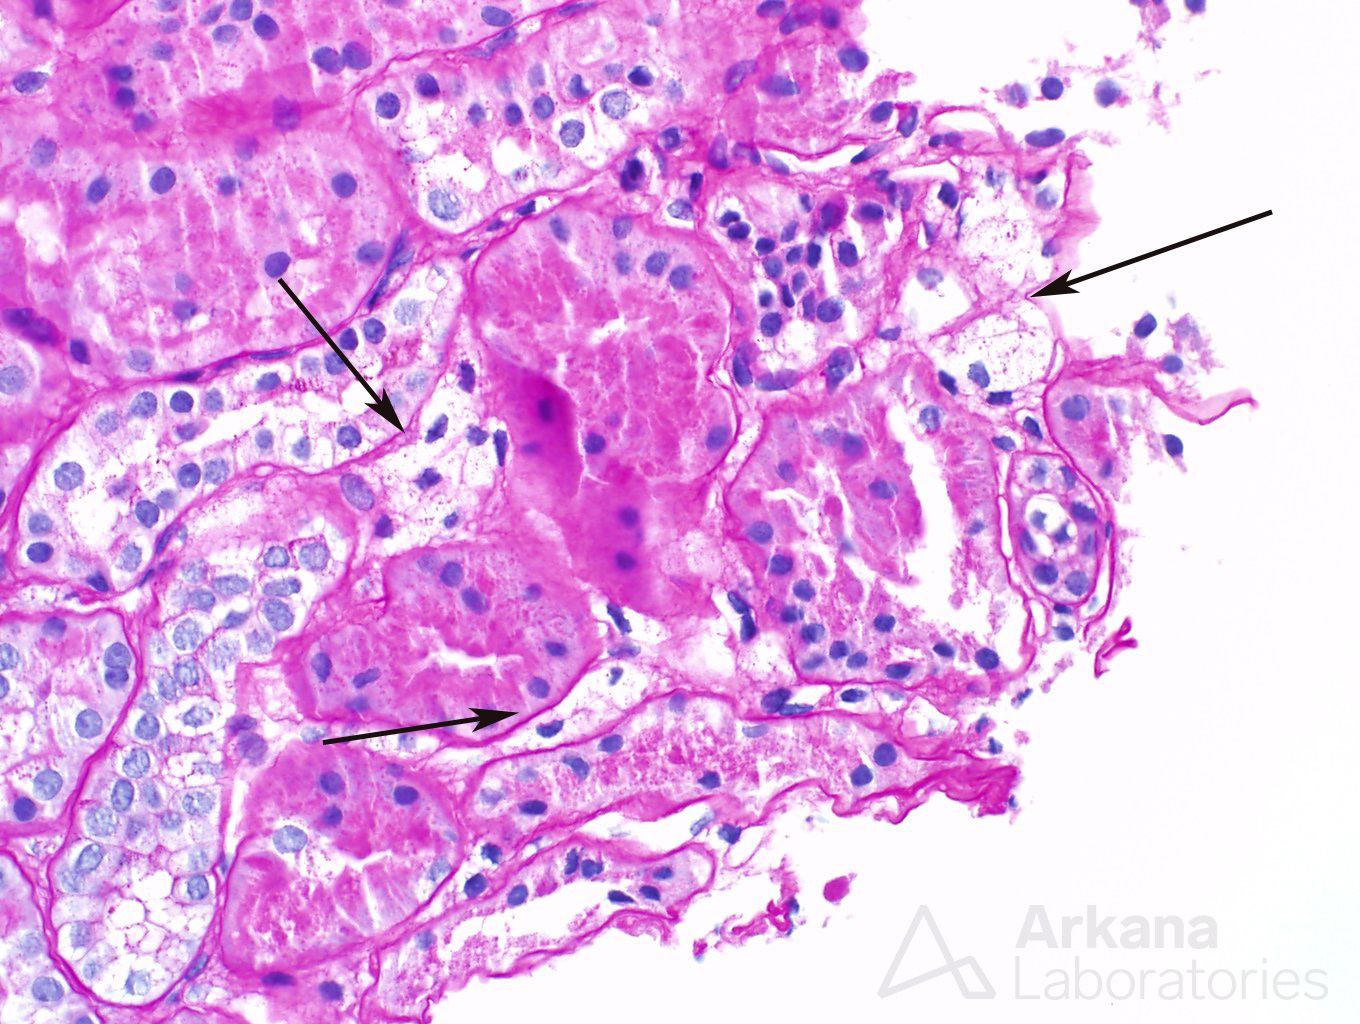 renal pathology, Arkana Laboratories, Alport syndrome